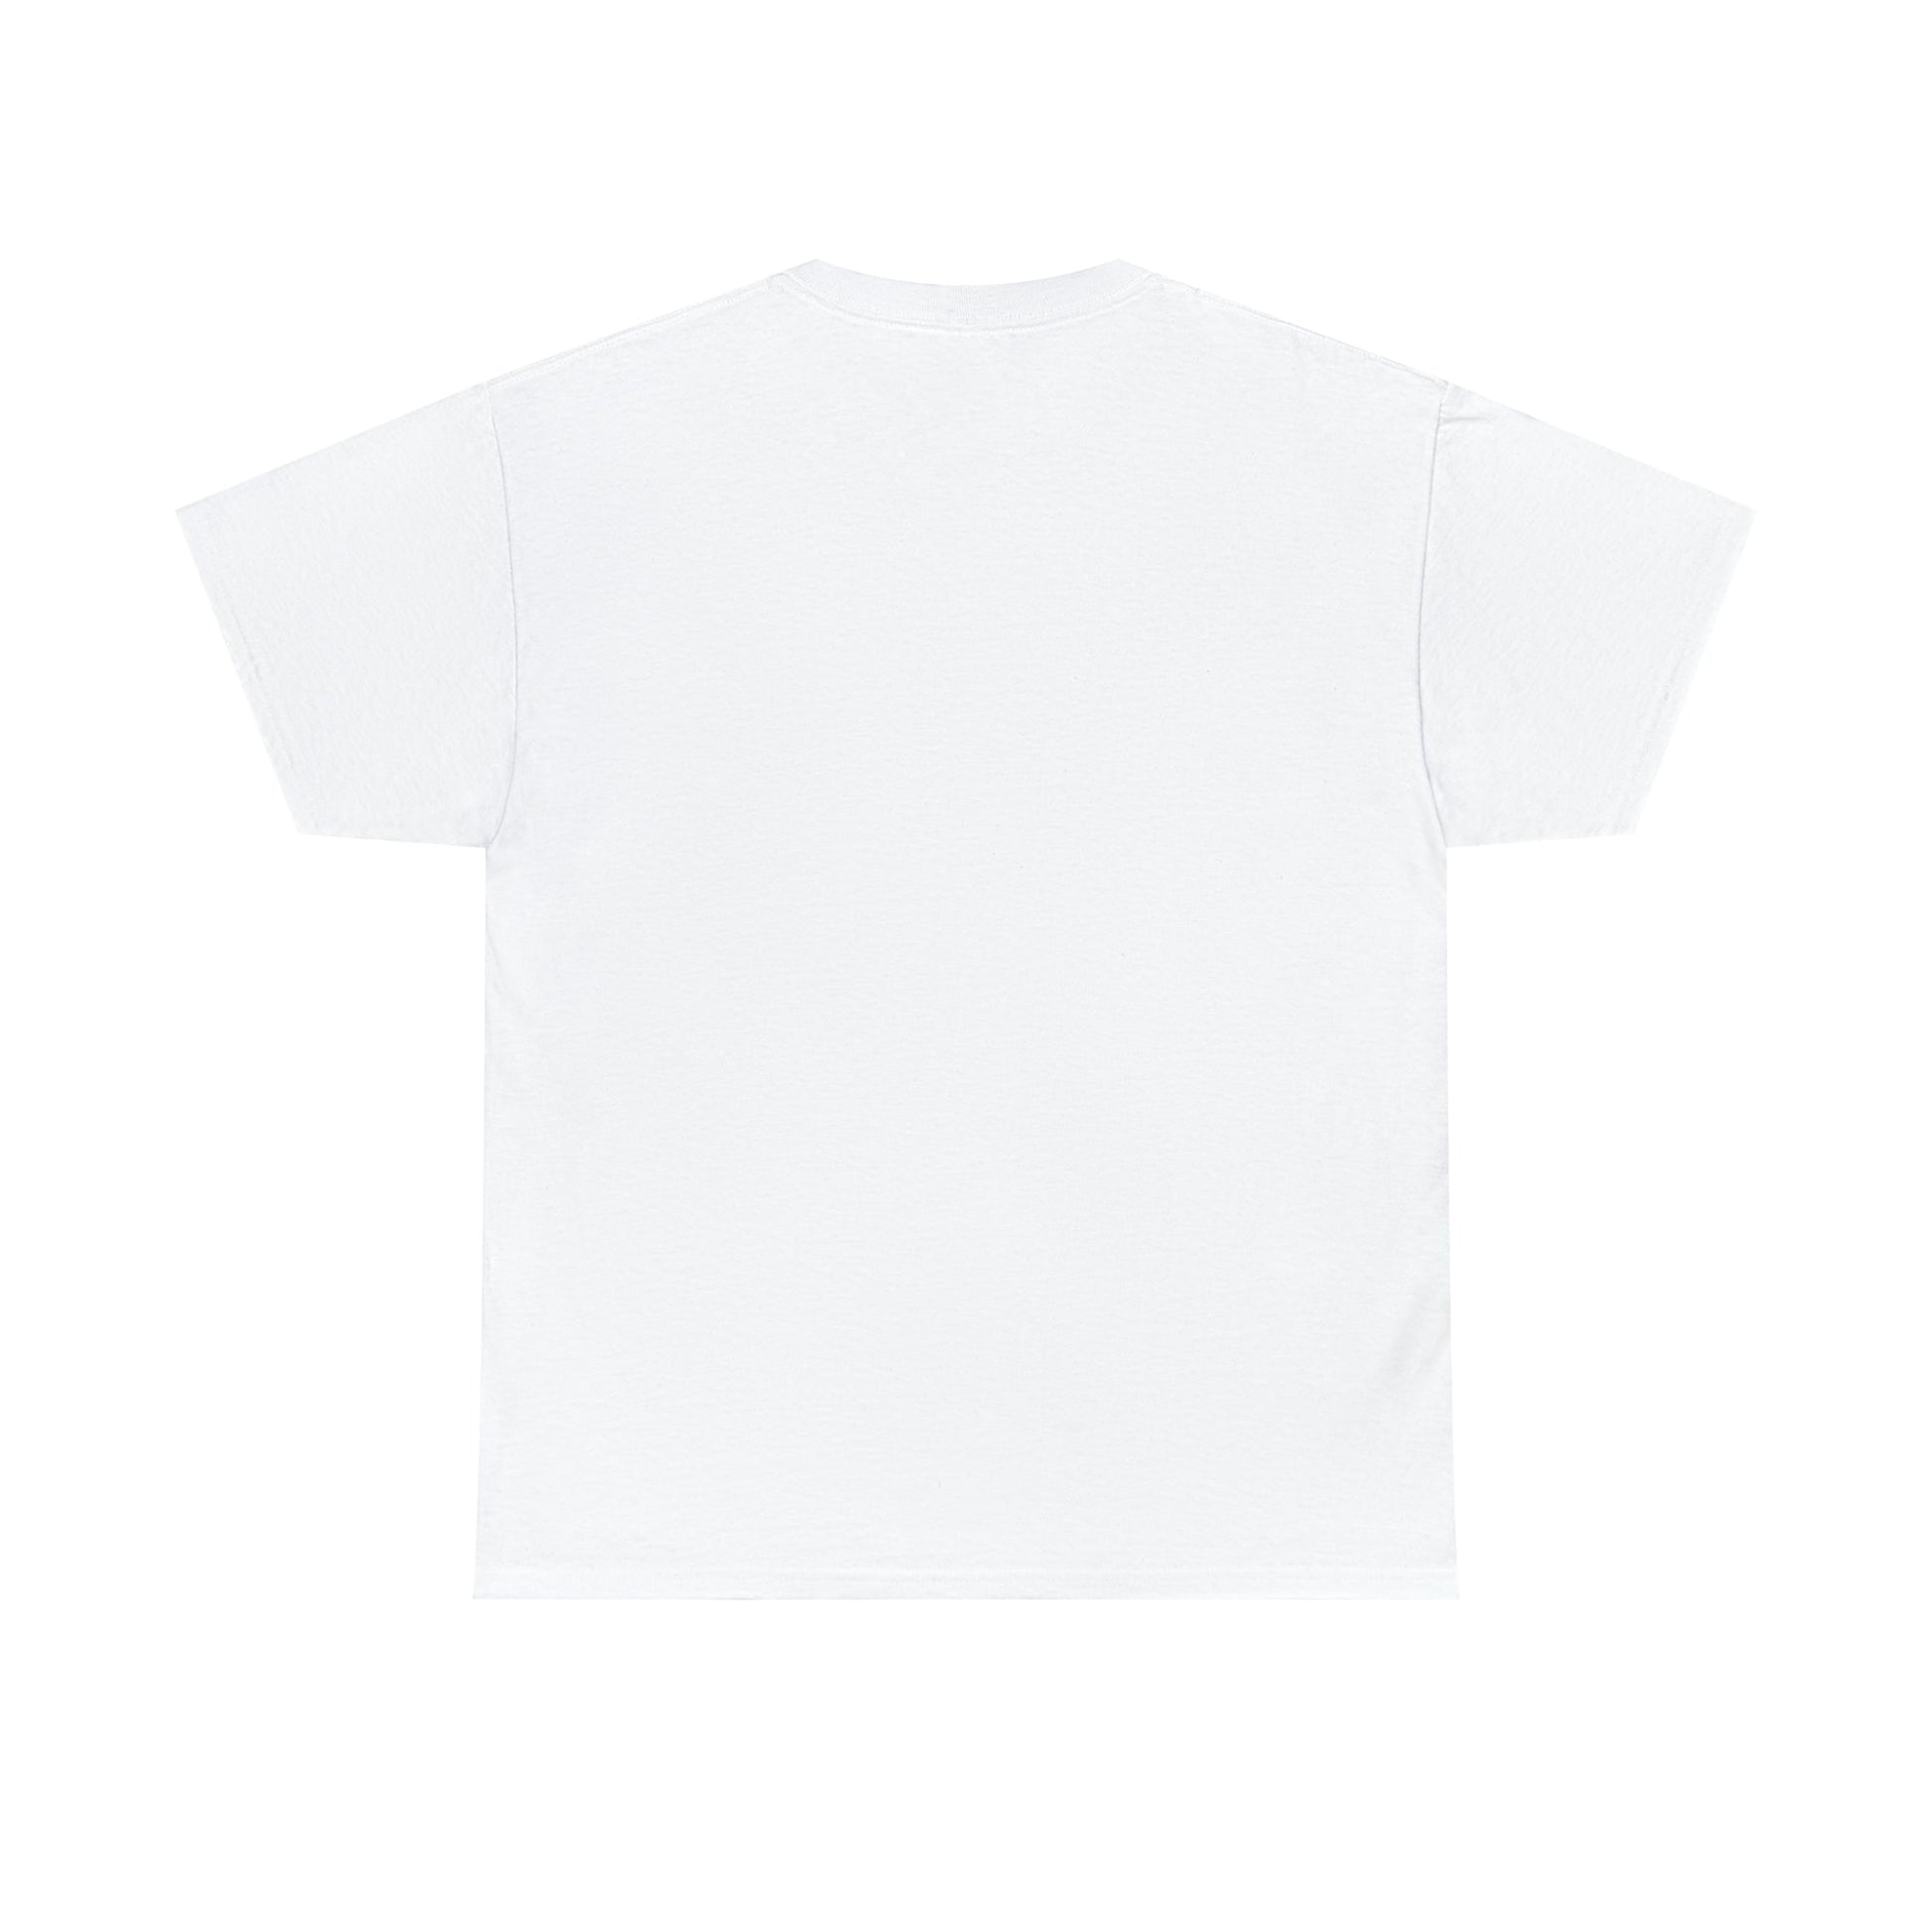 T-Shirt Basic - Homme - Collection "Définition" - Le Traileur Anonyme